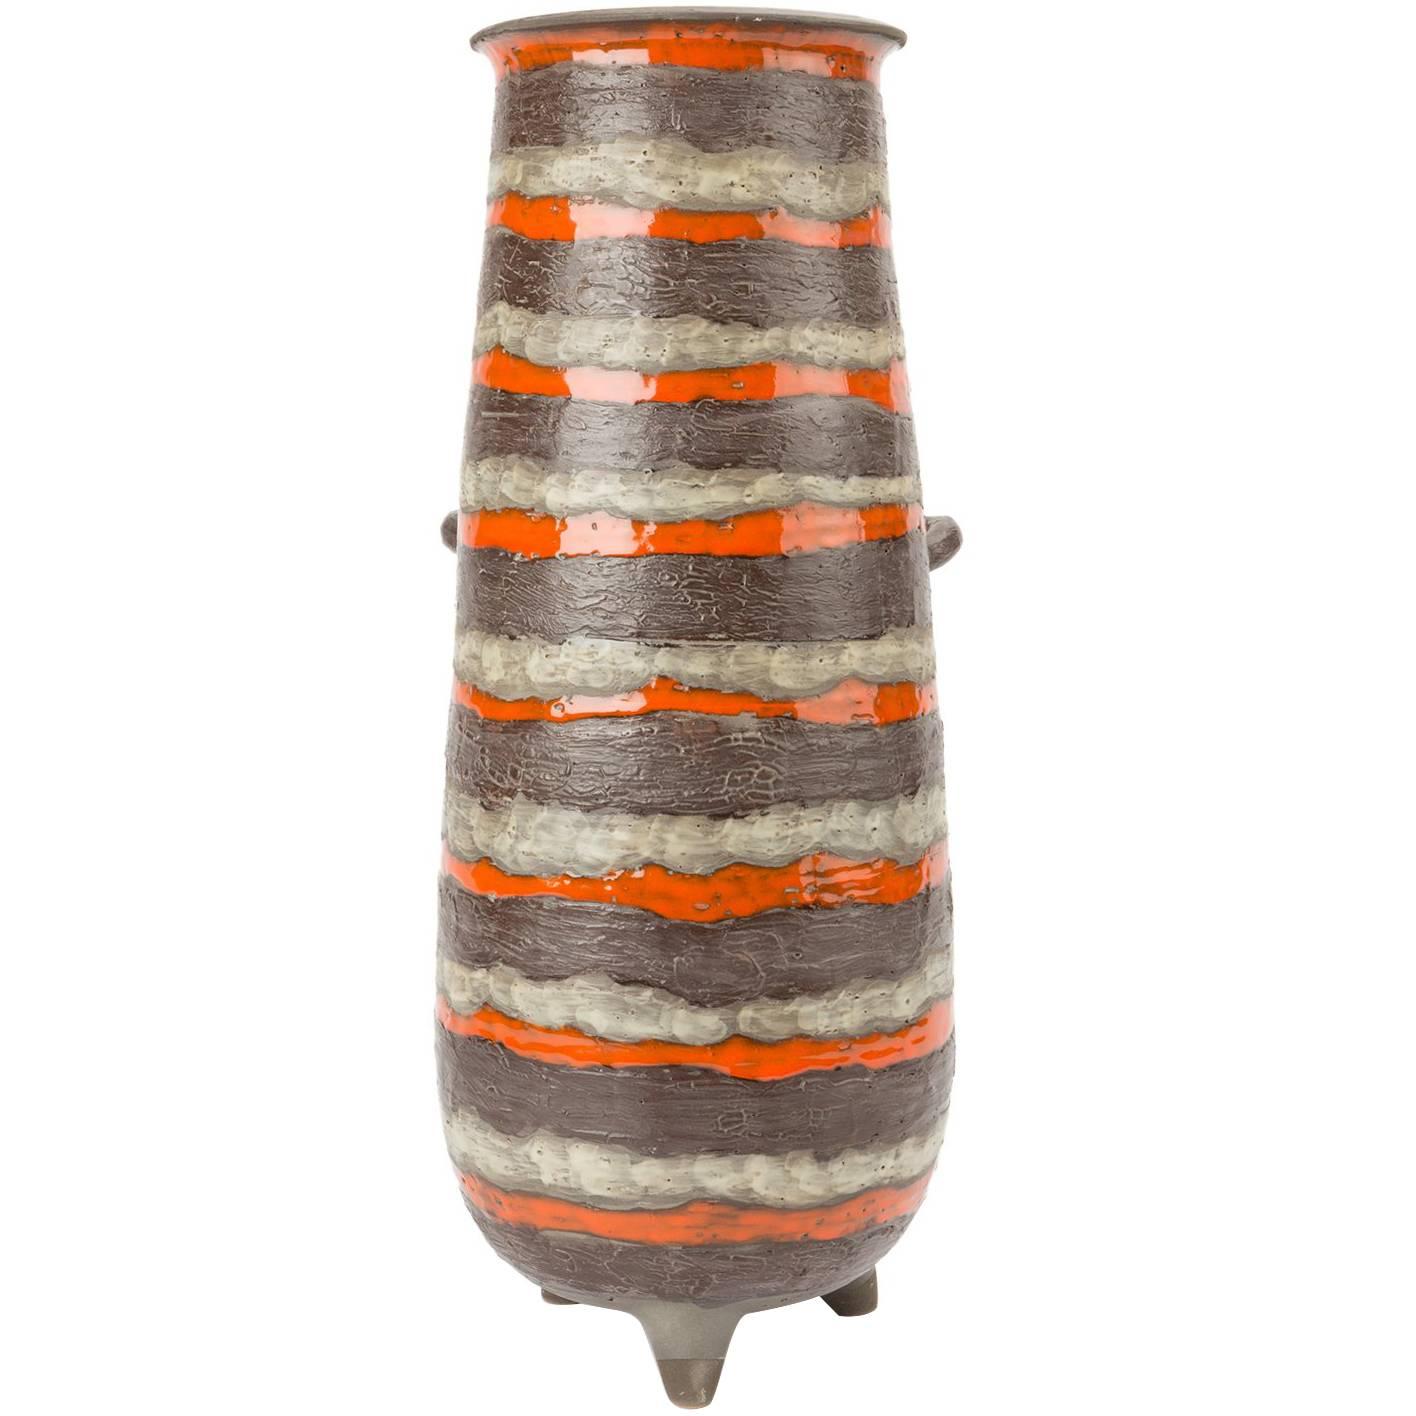 Signed Glazed Ceramic Vase by Cau .G Bitossi and Figli 2016 For Sale